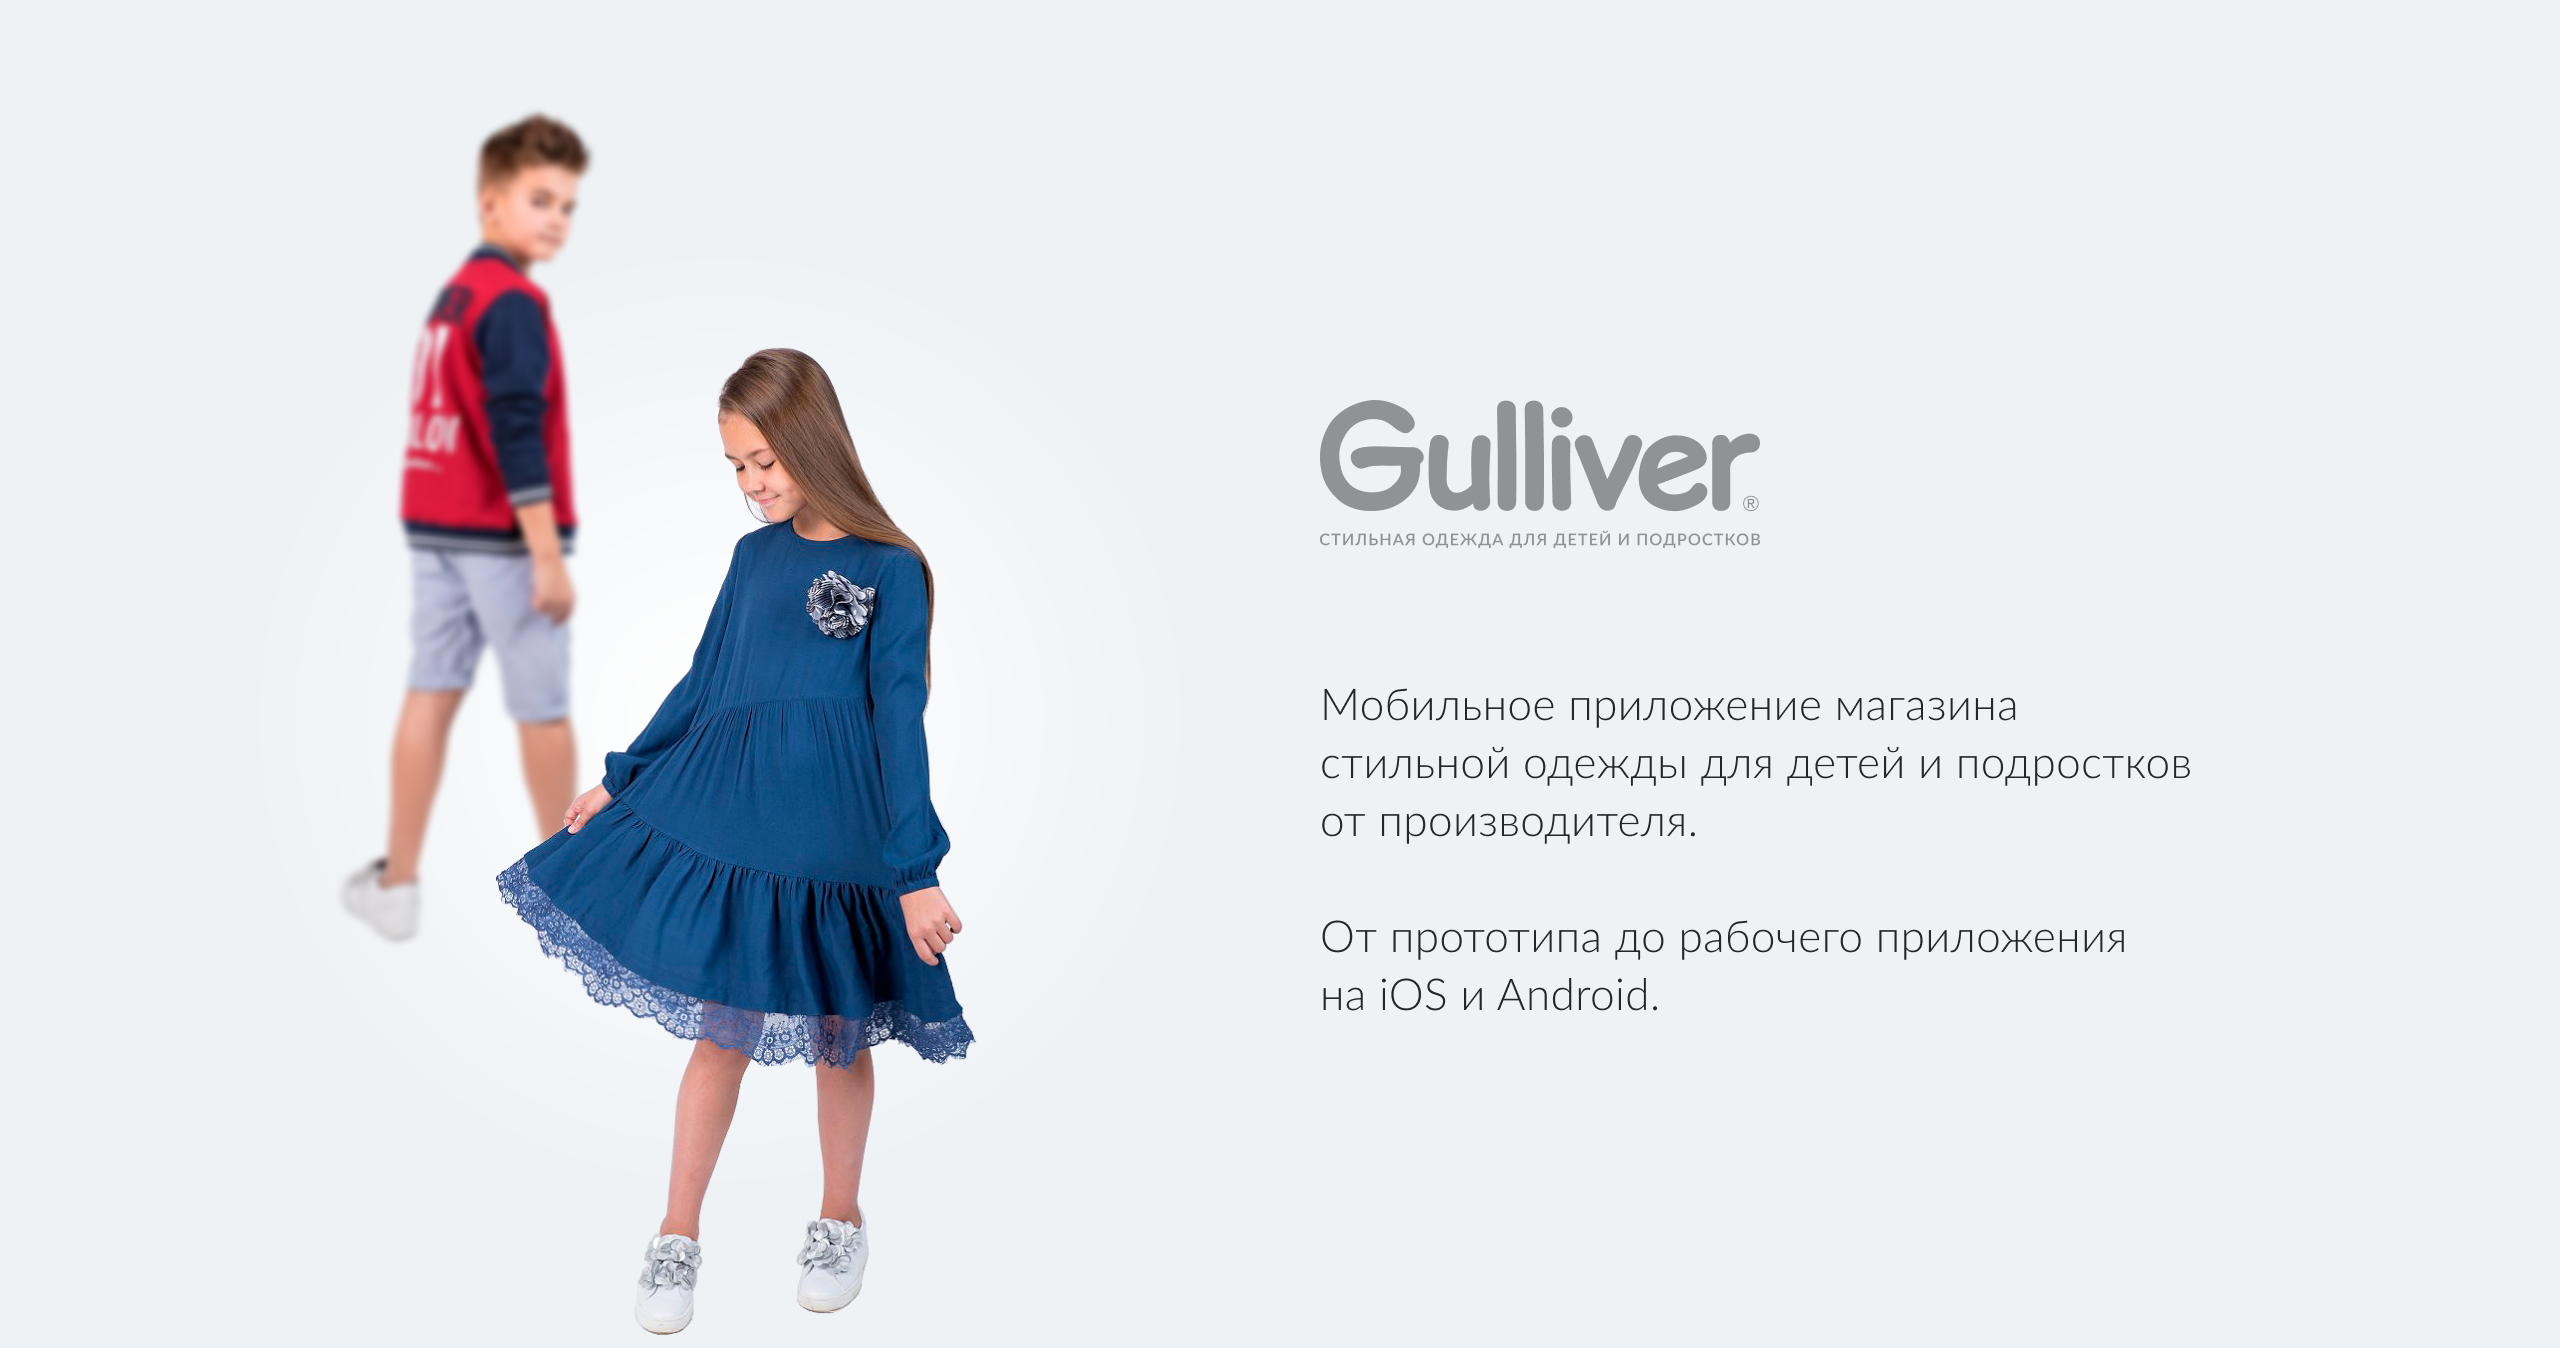 Gulliver
Аналитика / Дизайн / Фронтенд-программирование
© No Logo Studio